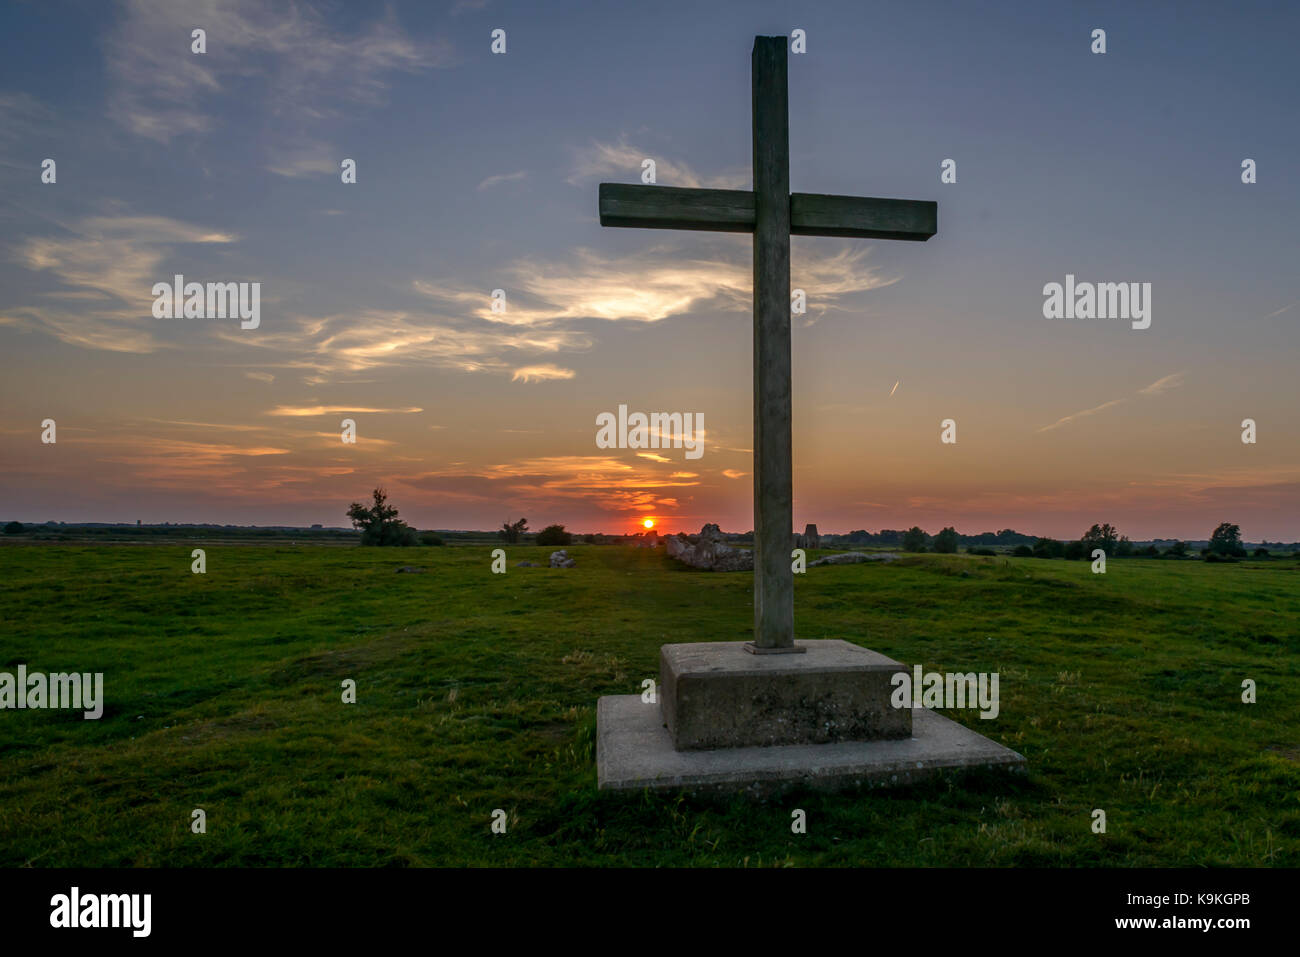 Sonnenuntergang Benets Abbey Norfolk Broads/Ostküste/England/UK/Britische Iseles Stockfoto